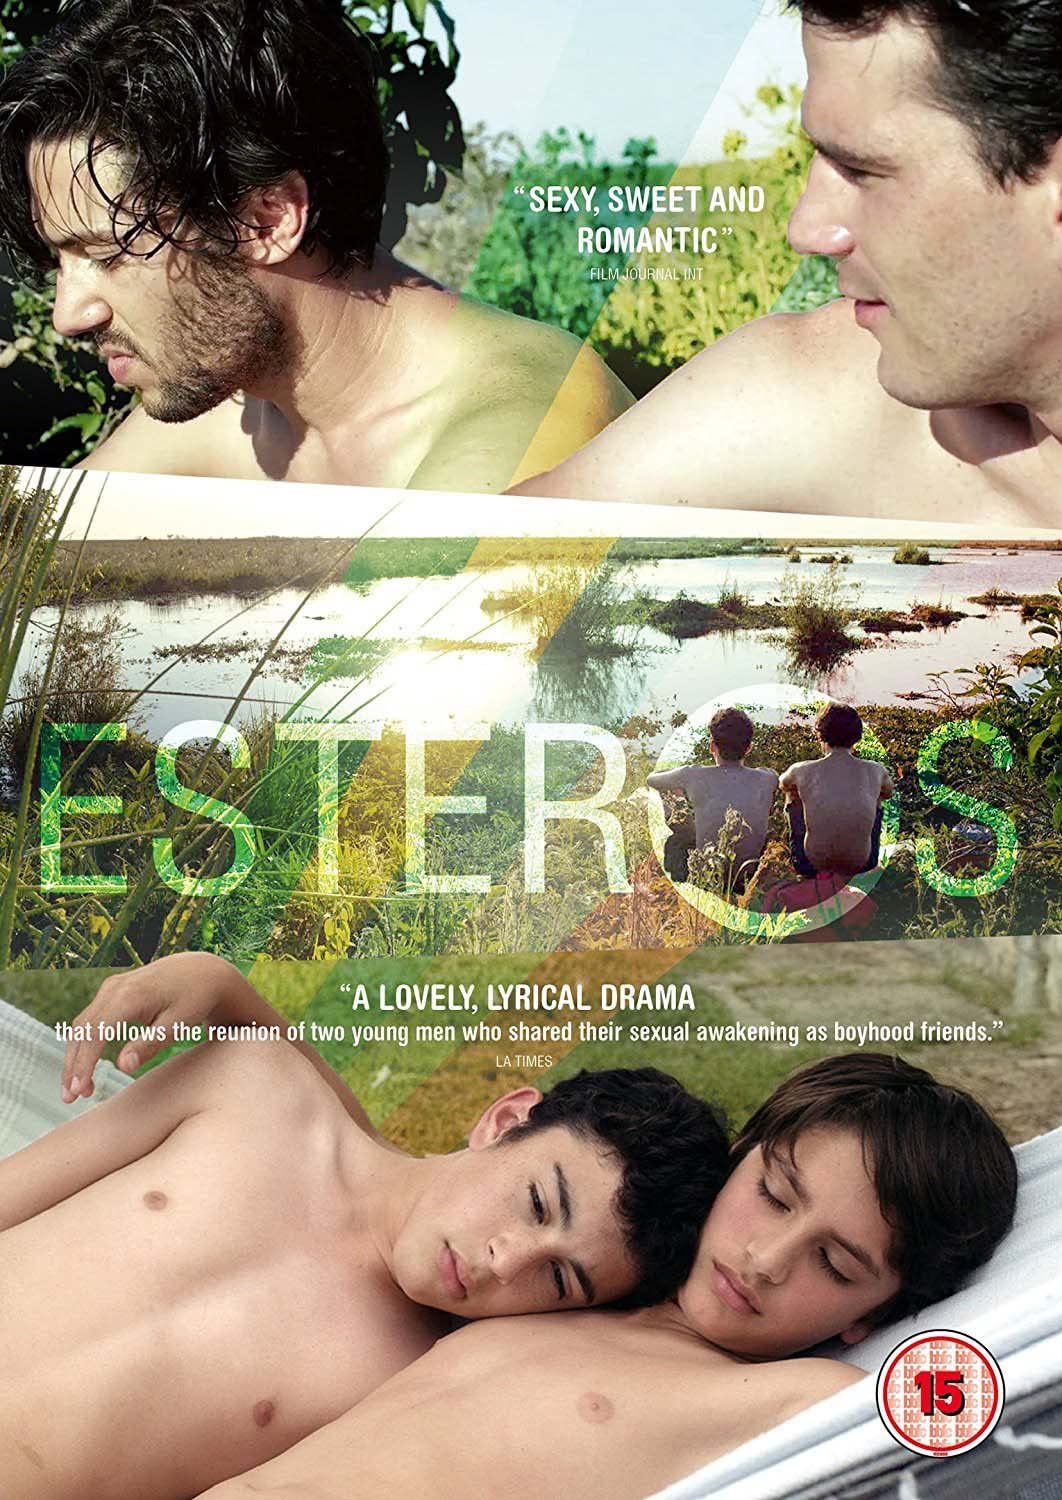 Esteros - Drama/Romance [DVD]